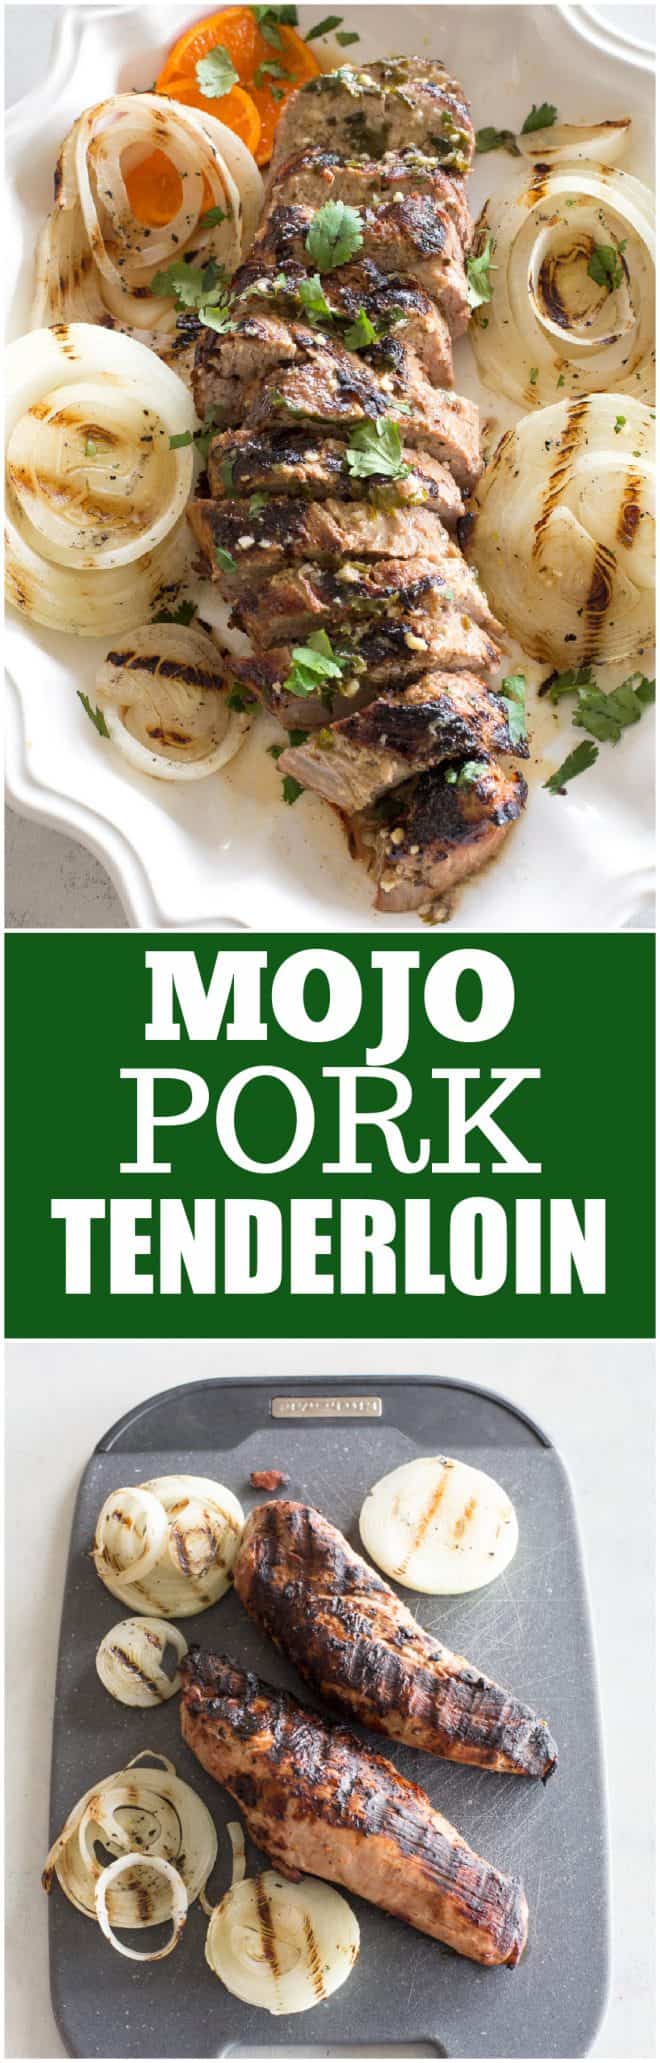 fb image - Mojo Pork Tenderloin